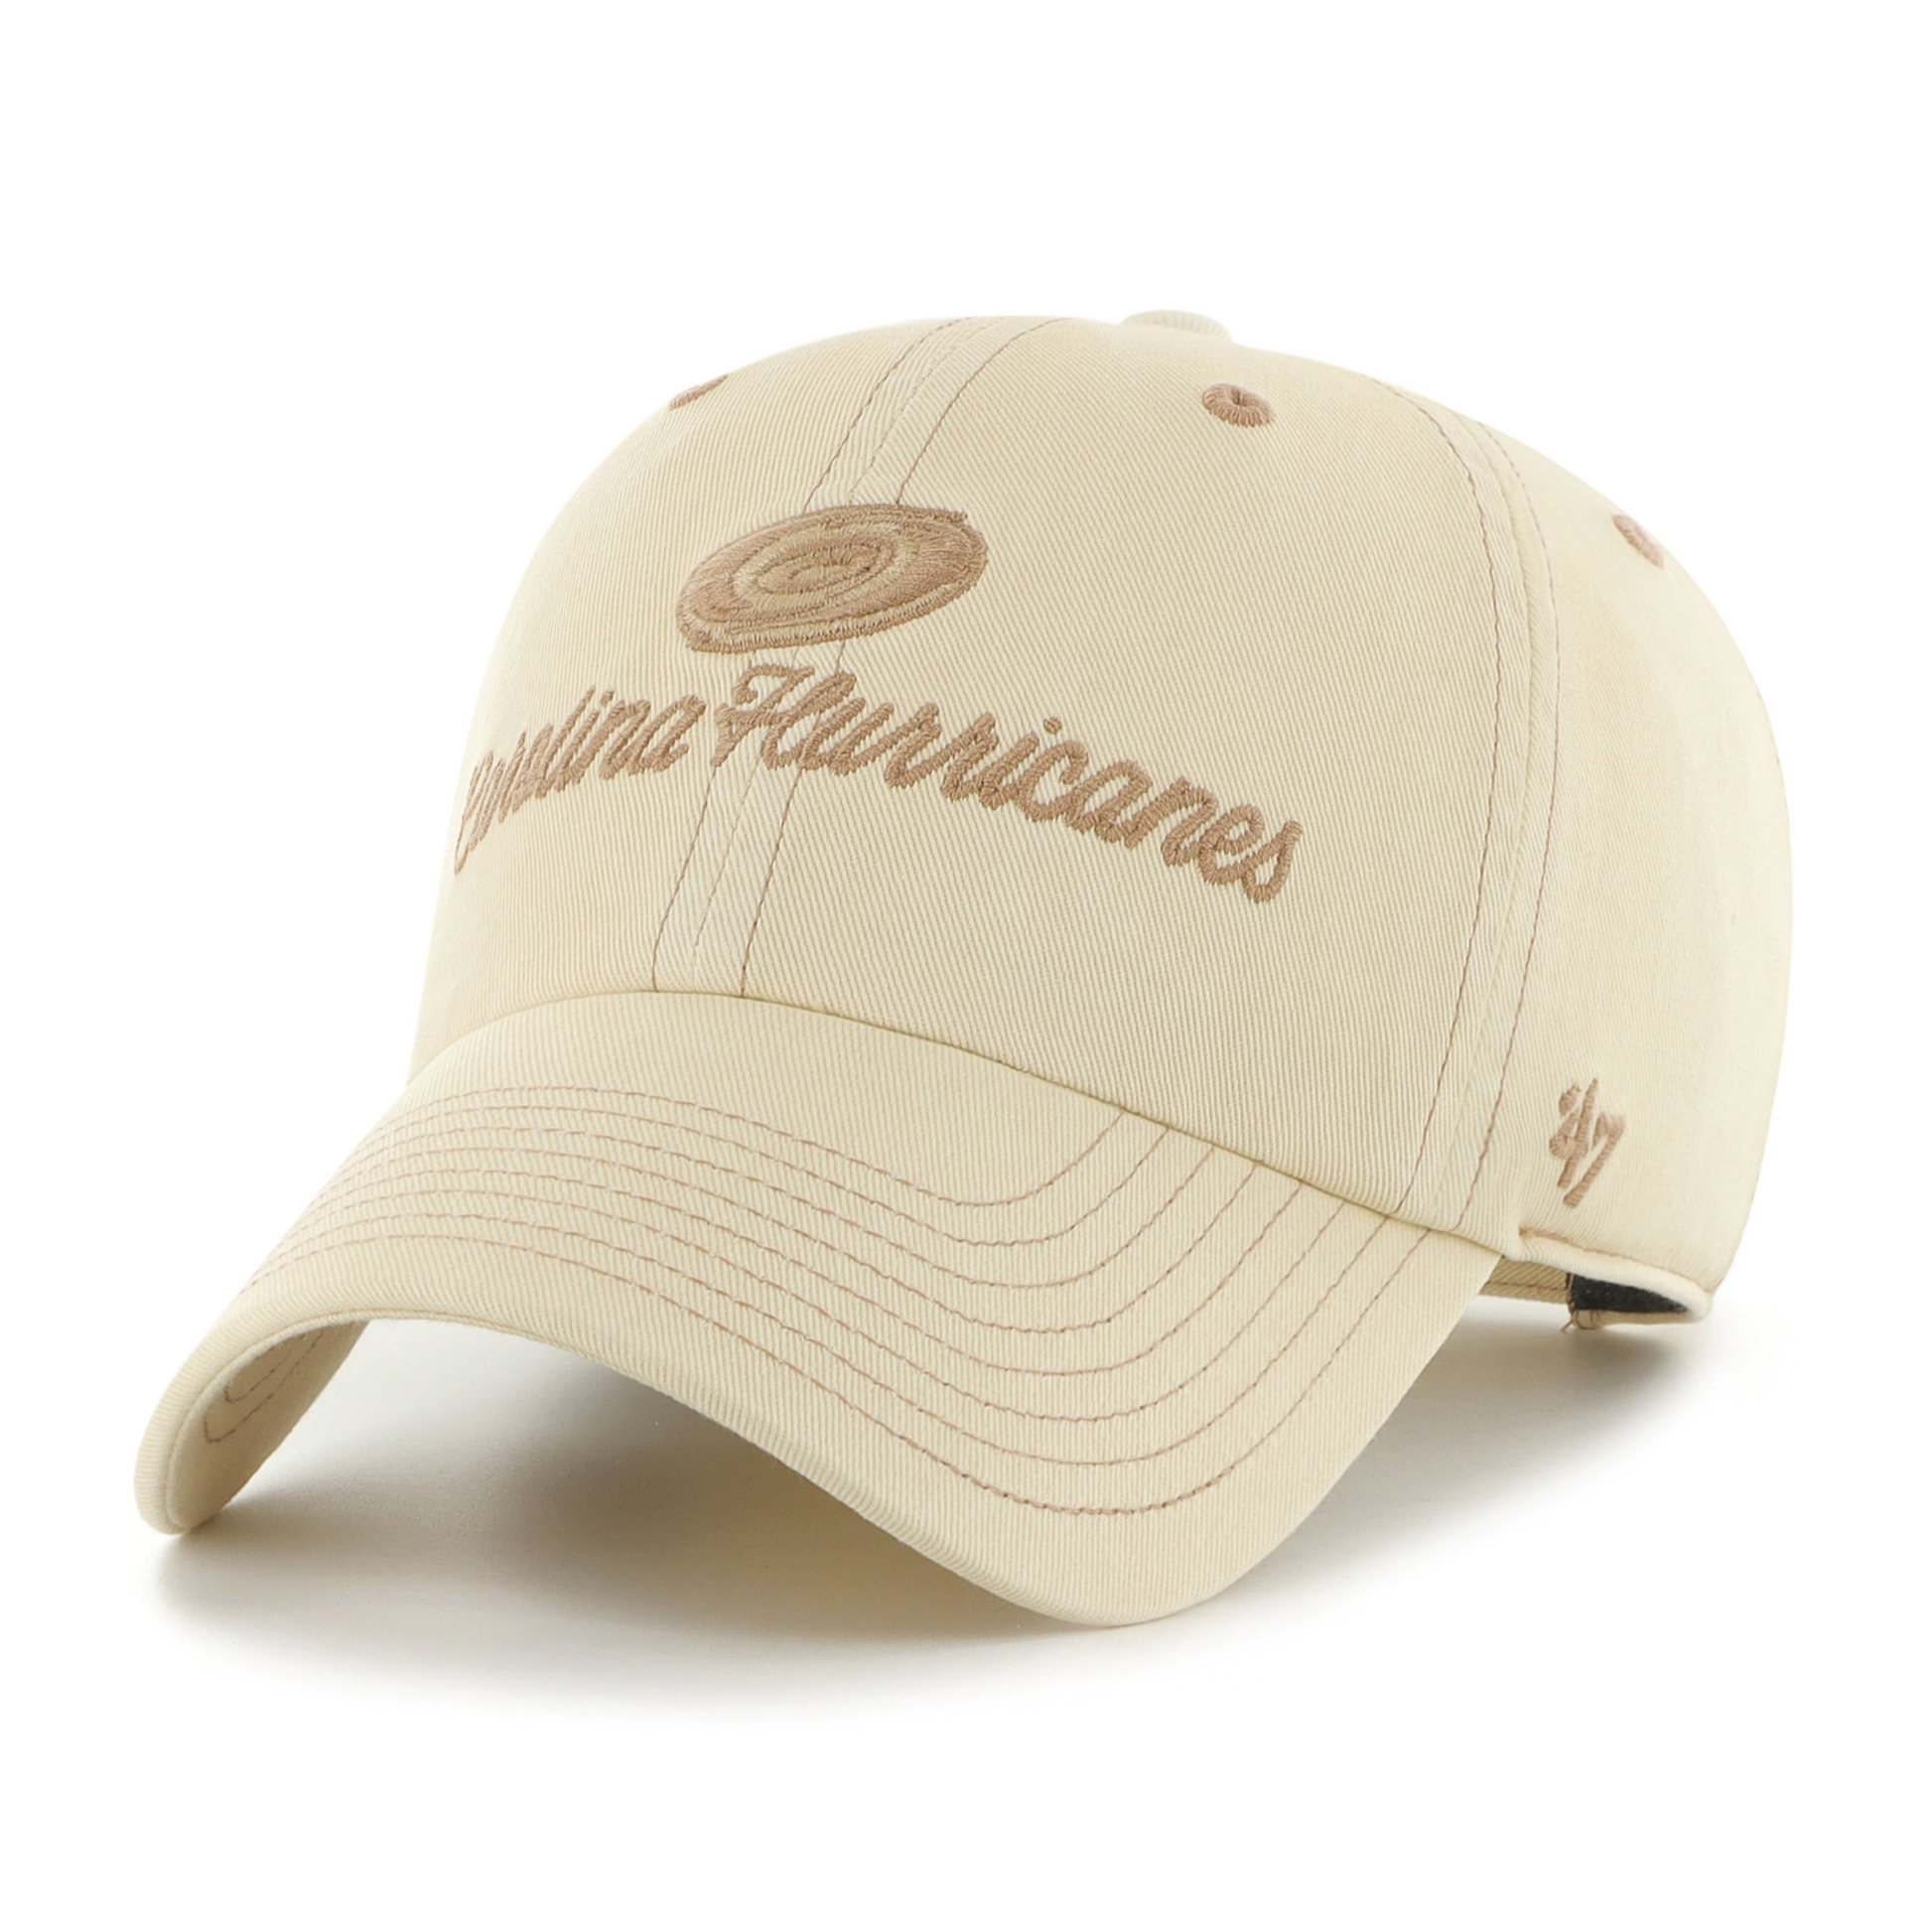 Front: Cream hat with Carolina Hurricanes, Eye logo on front, 47 logo on side